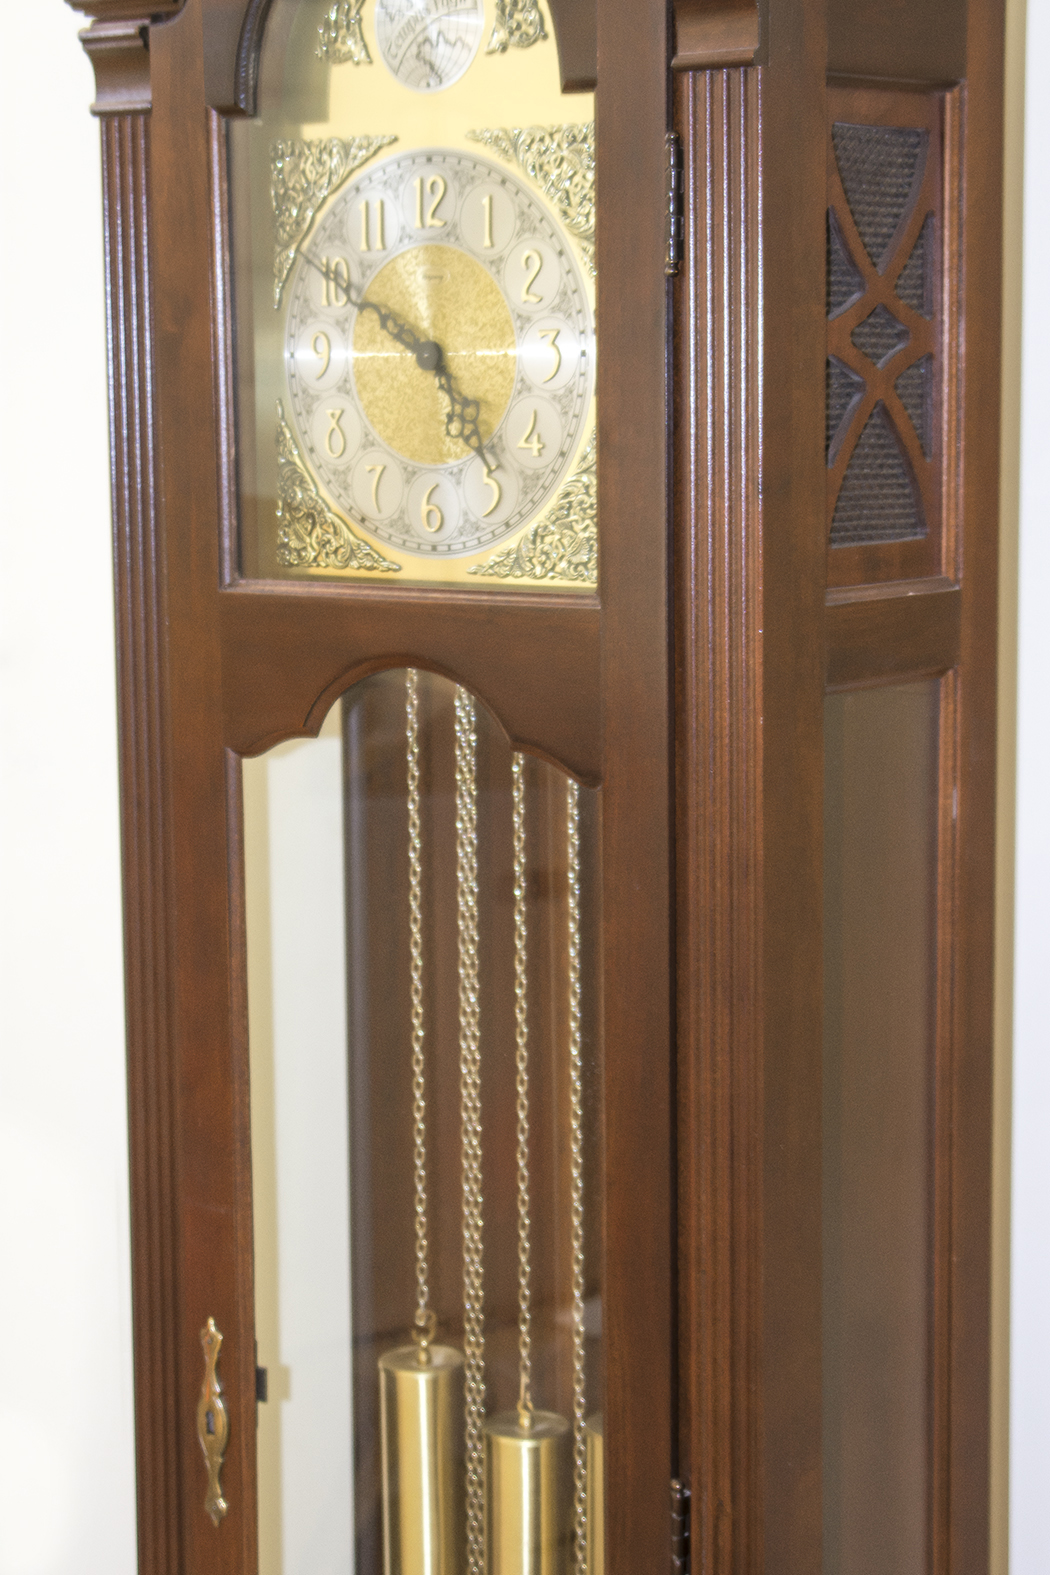 rigidway grandfather clock